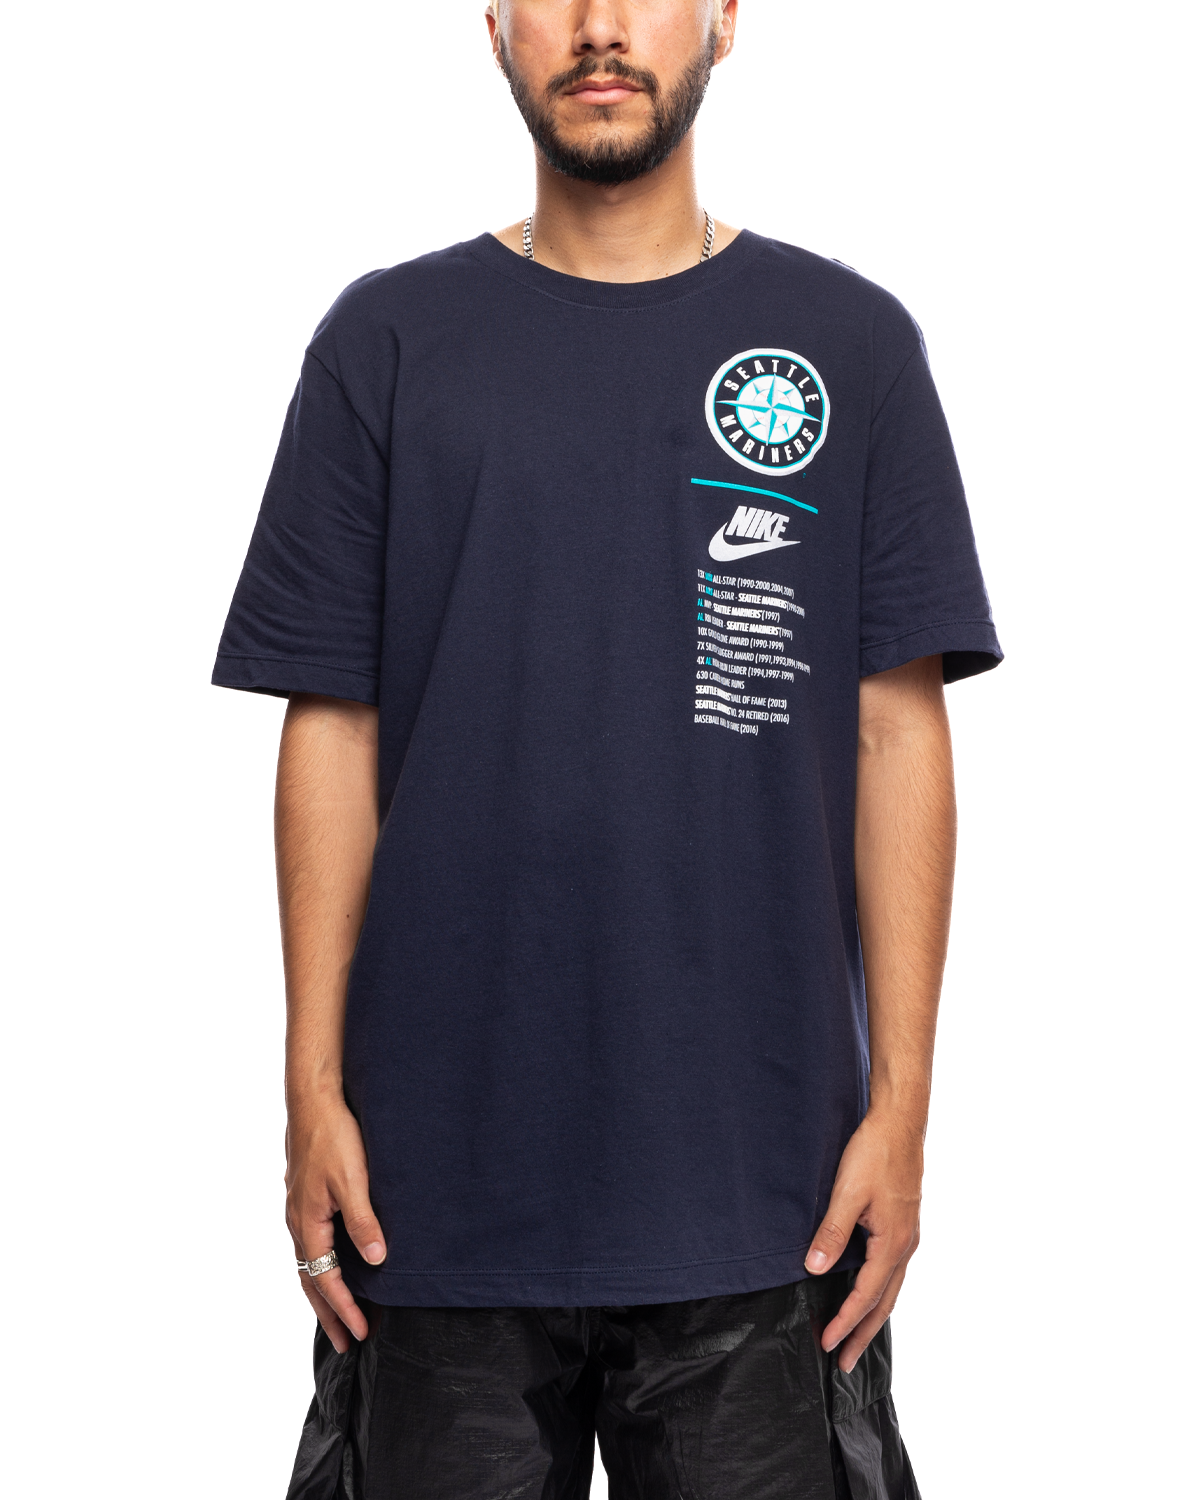 All Star Navy - The Kid T-Shirt 2023 MLB ASG